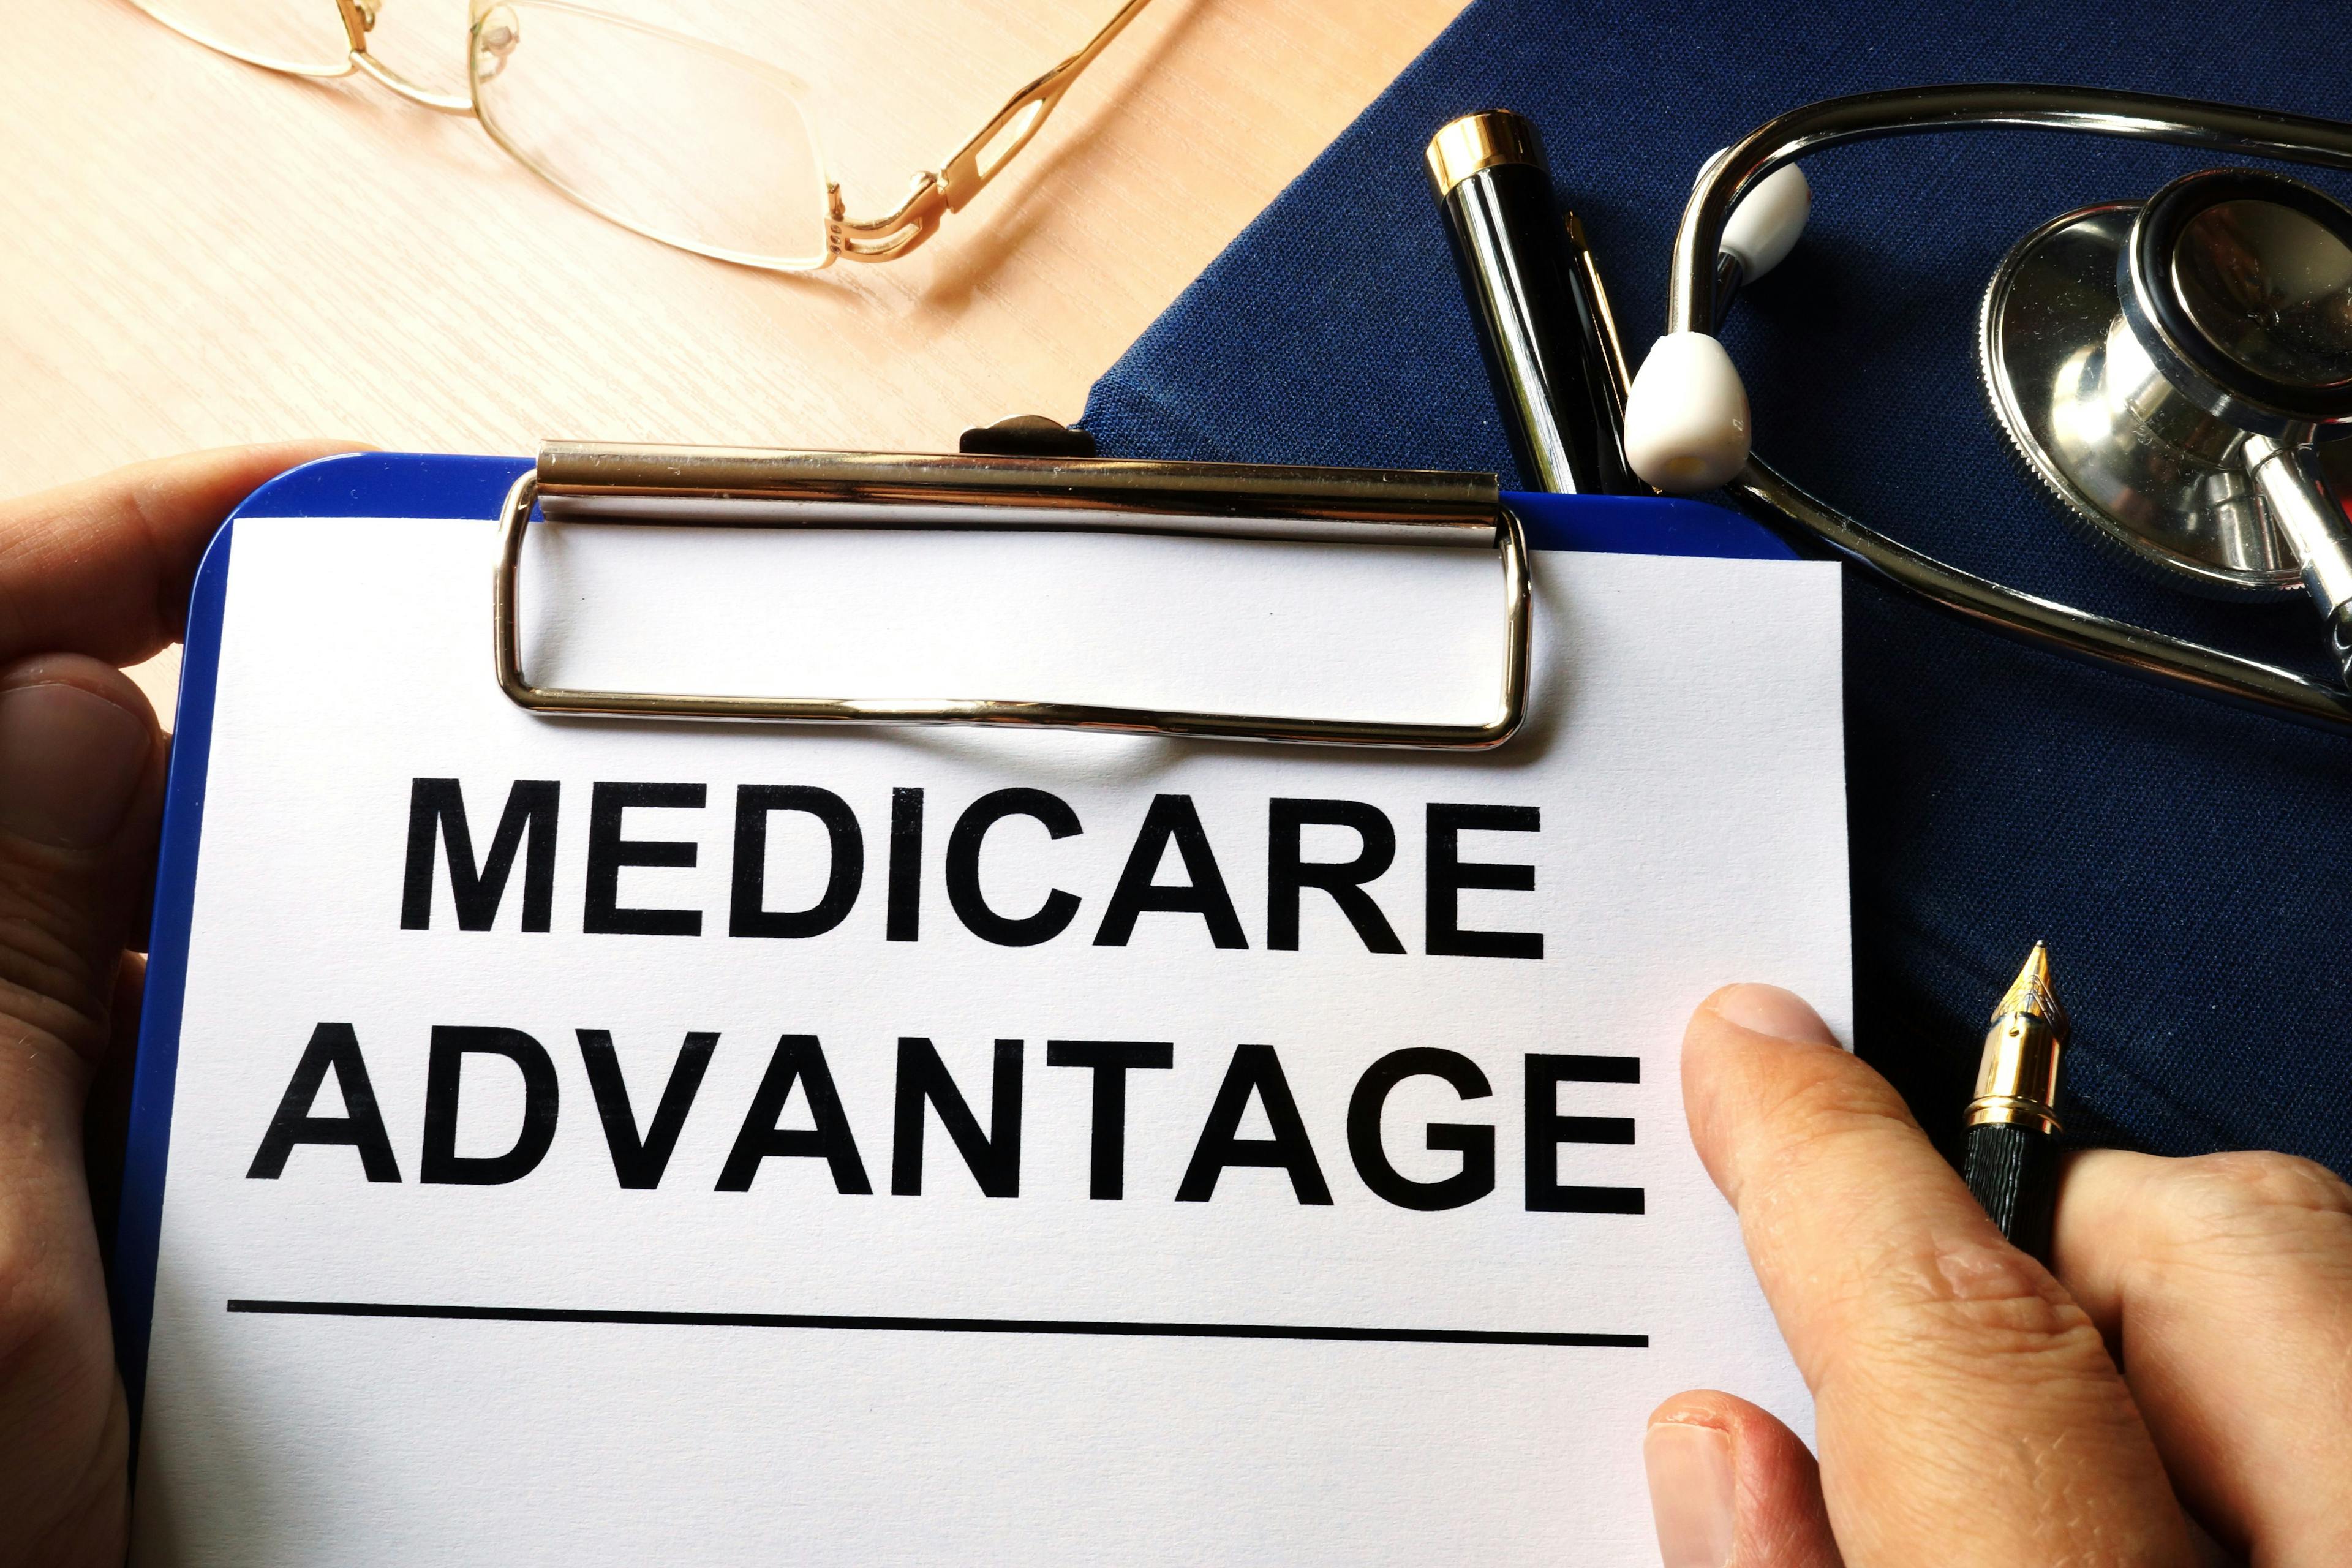 Medicare Advantage Plans Reach Multiple U.S. States This Week